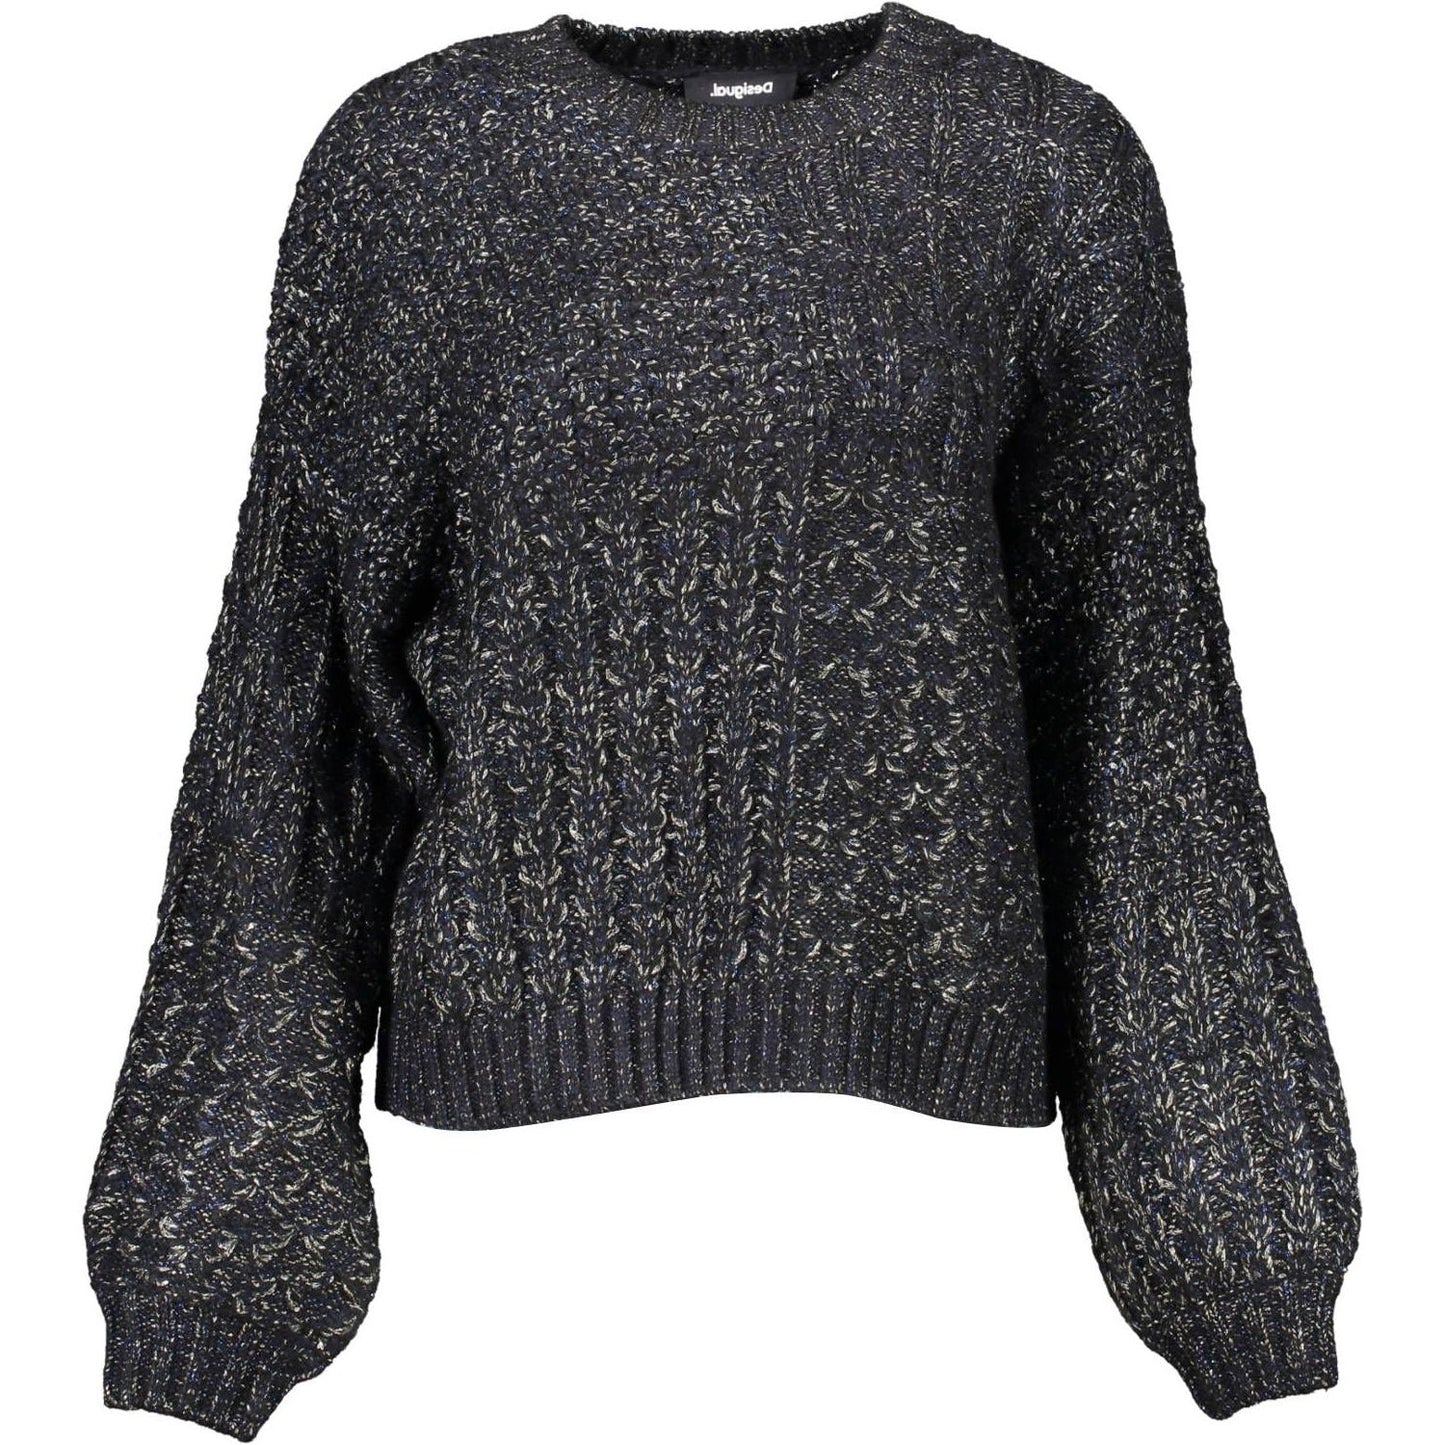 Desigual Chic Contrasting Details Round Neck Sweater chic-contrasting-details-round-neck-sweater